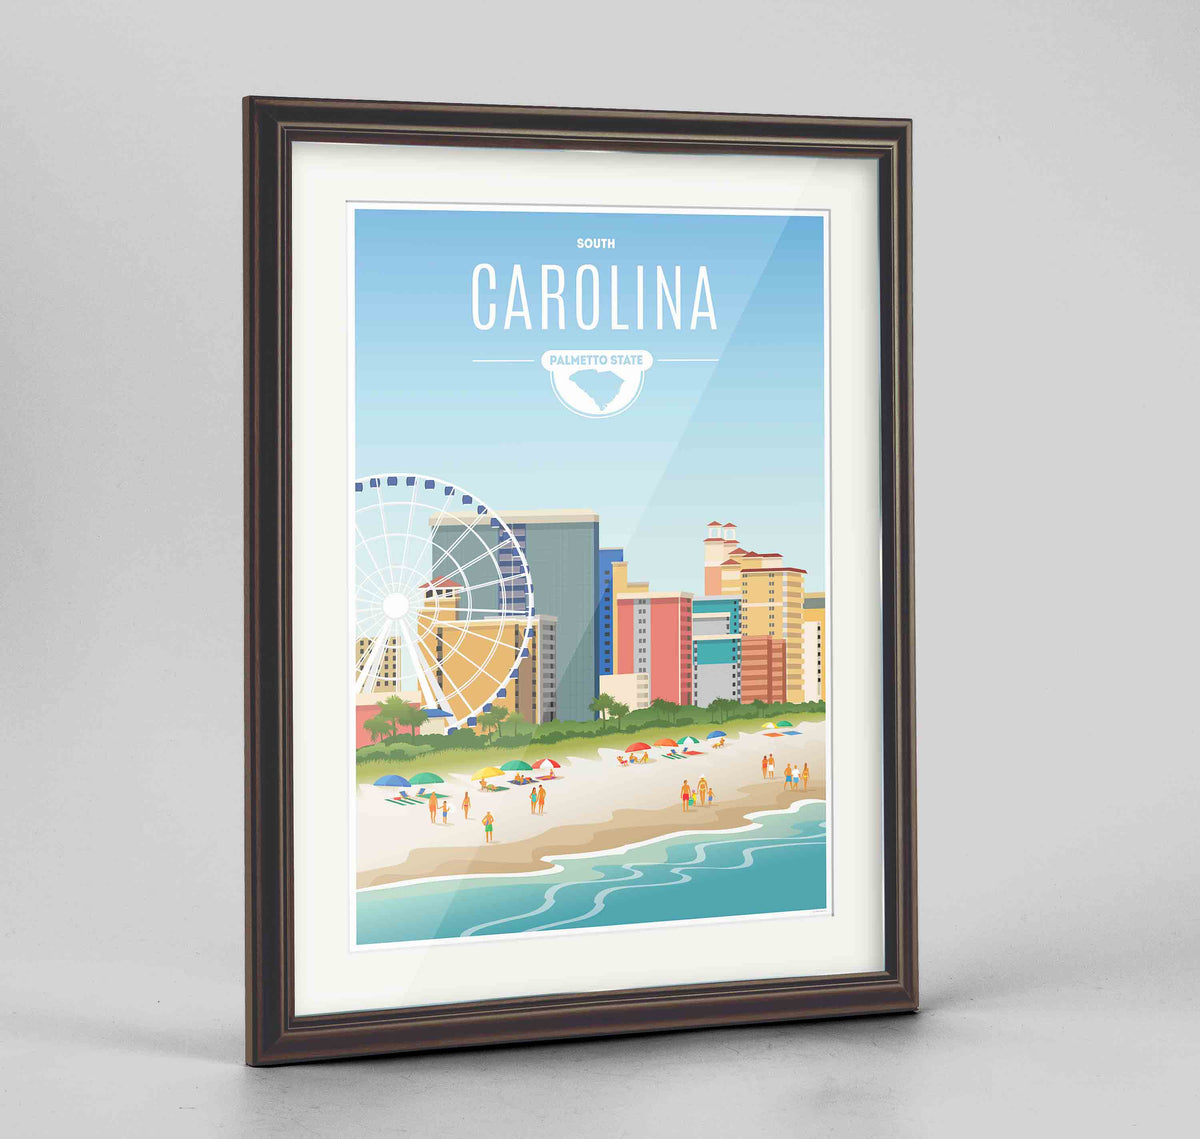 South Carolina State Frame Print